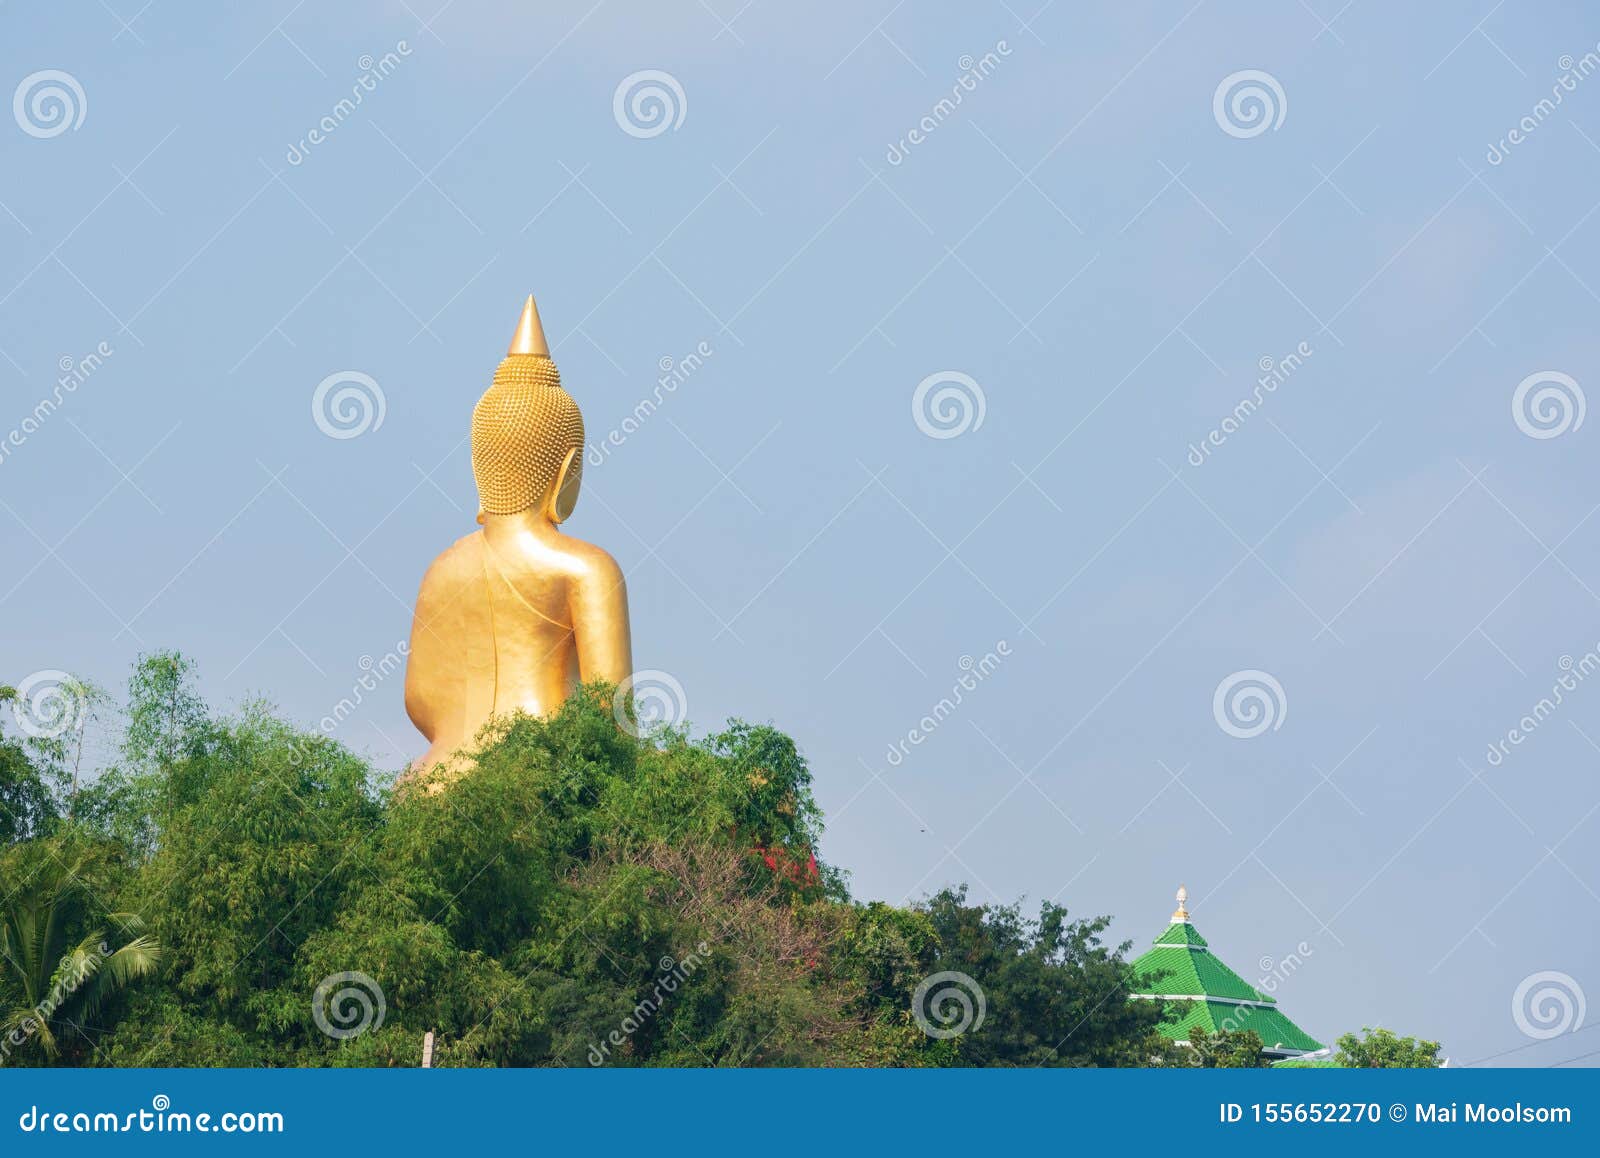 Bangkok, Thailand Jan 20, 2016 Temple Of Buddhist